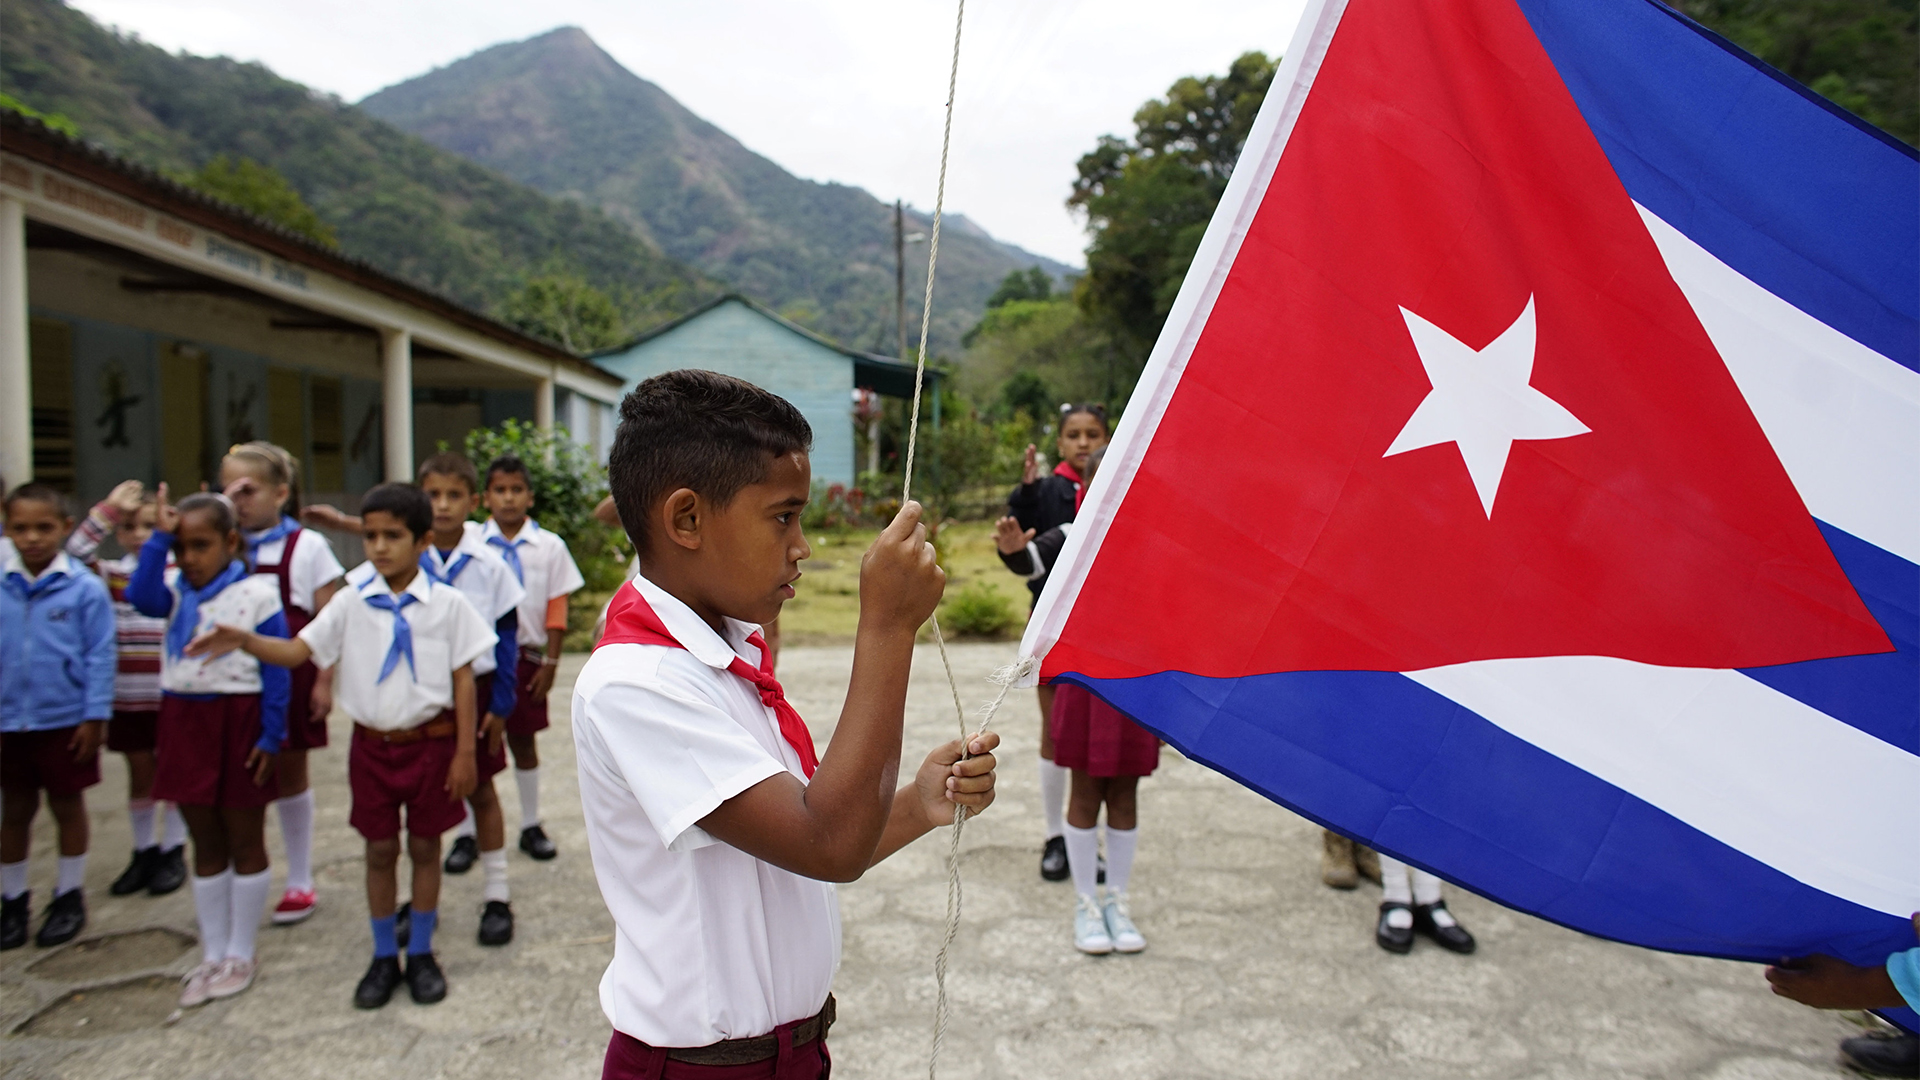 Flaggenappell in einer Schule in Kuba | Bildquelle: REUTERS